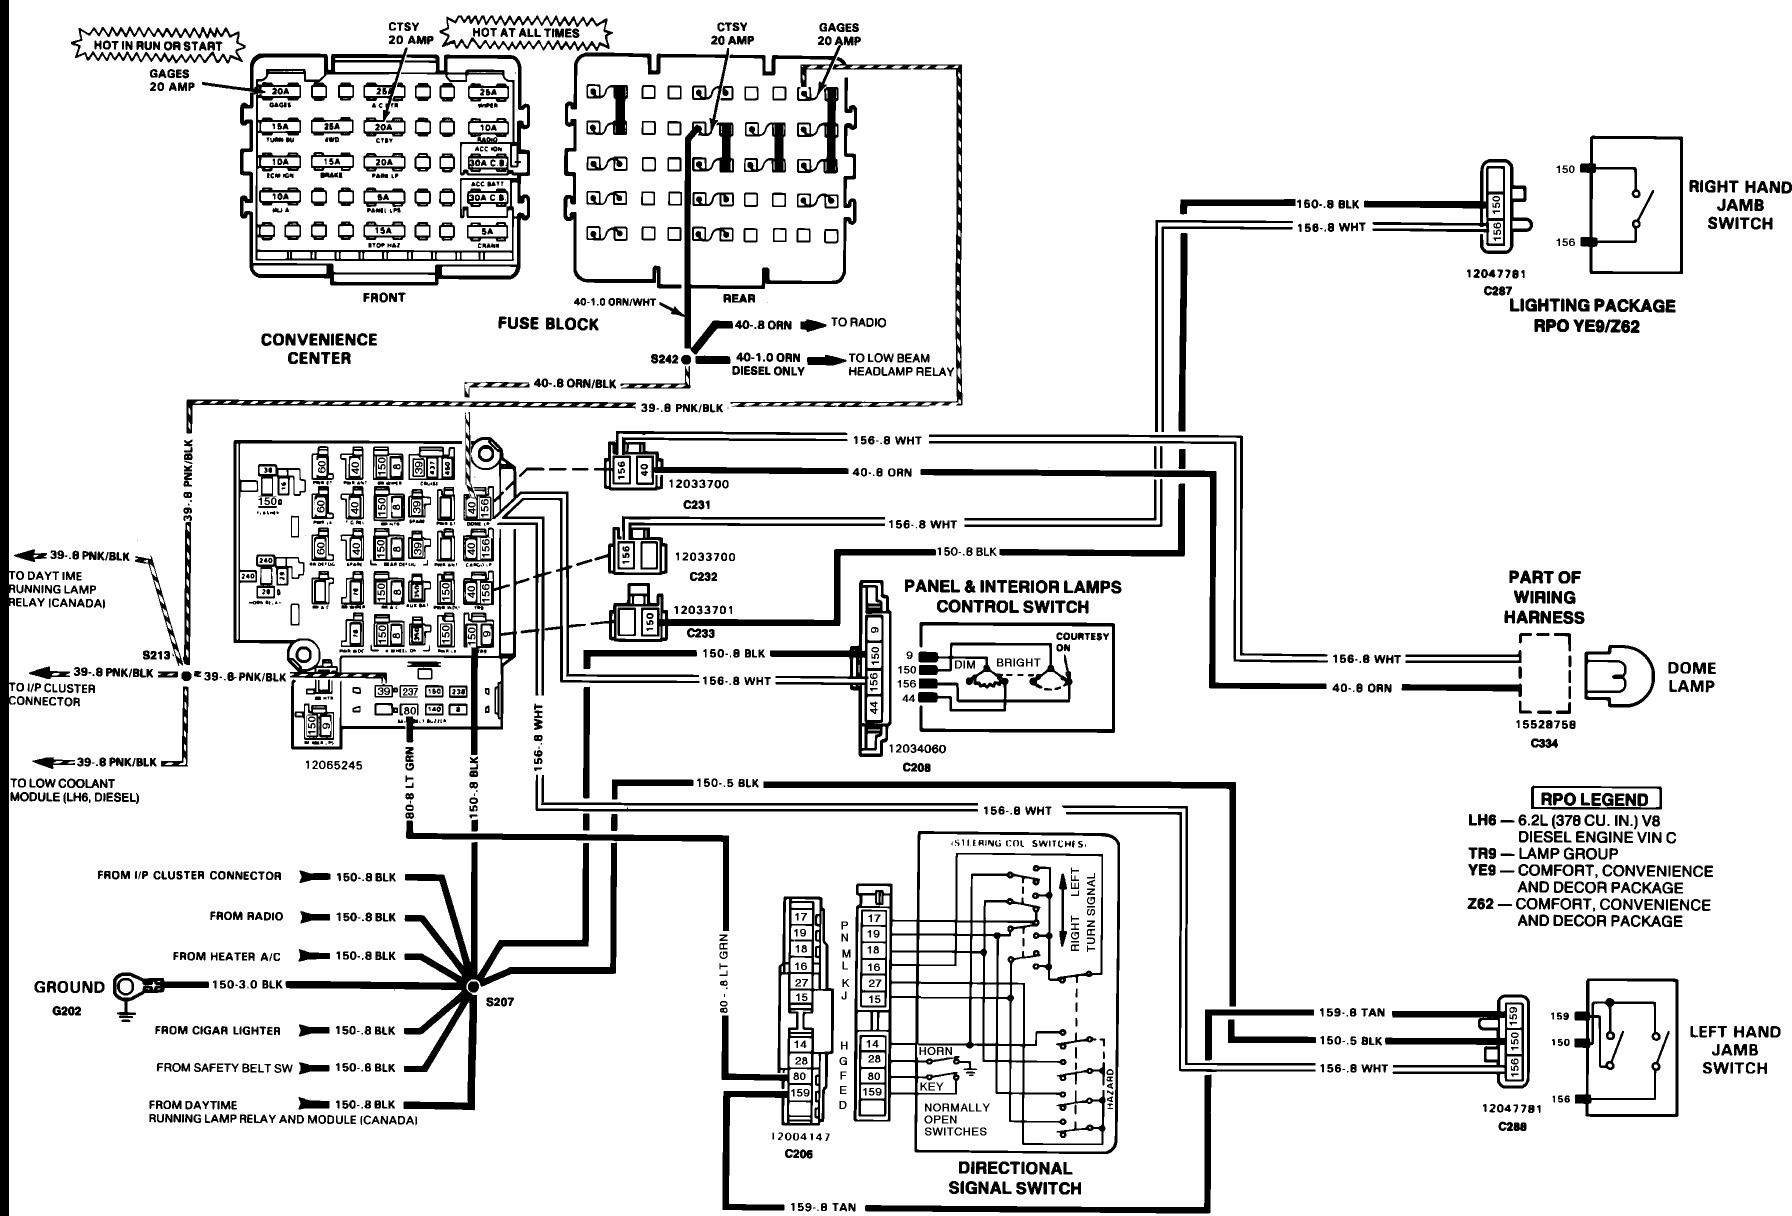 1995 Chevy Truck Parts Diagram Suburban Parts Diagram Besides Gm Bulkhead Connector Wiring Diagram Of 1995 Chevy Truck Parts Diagram